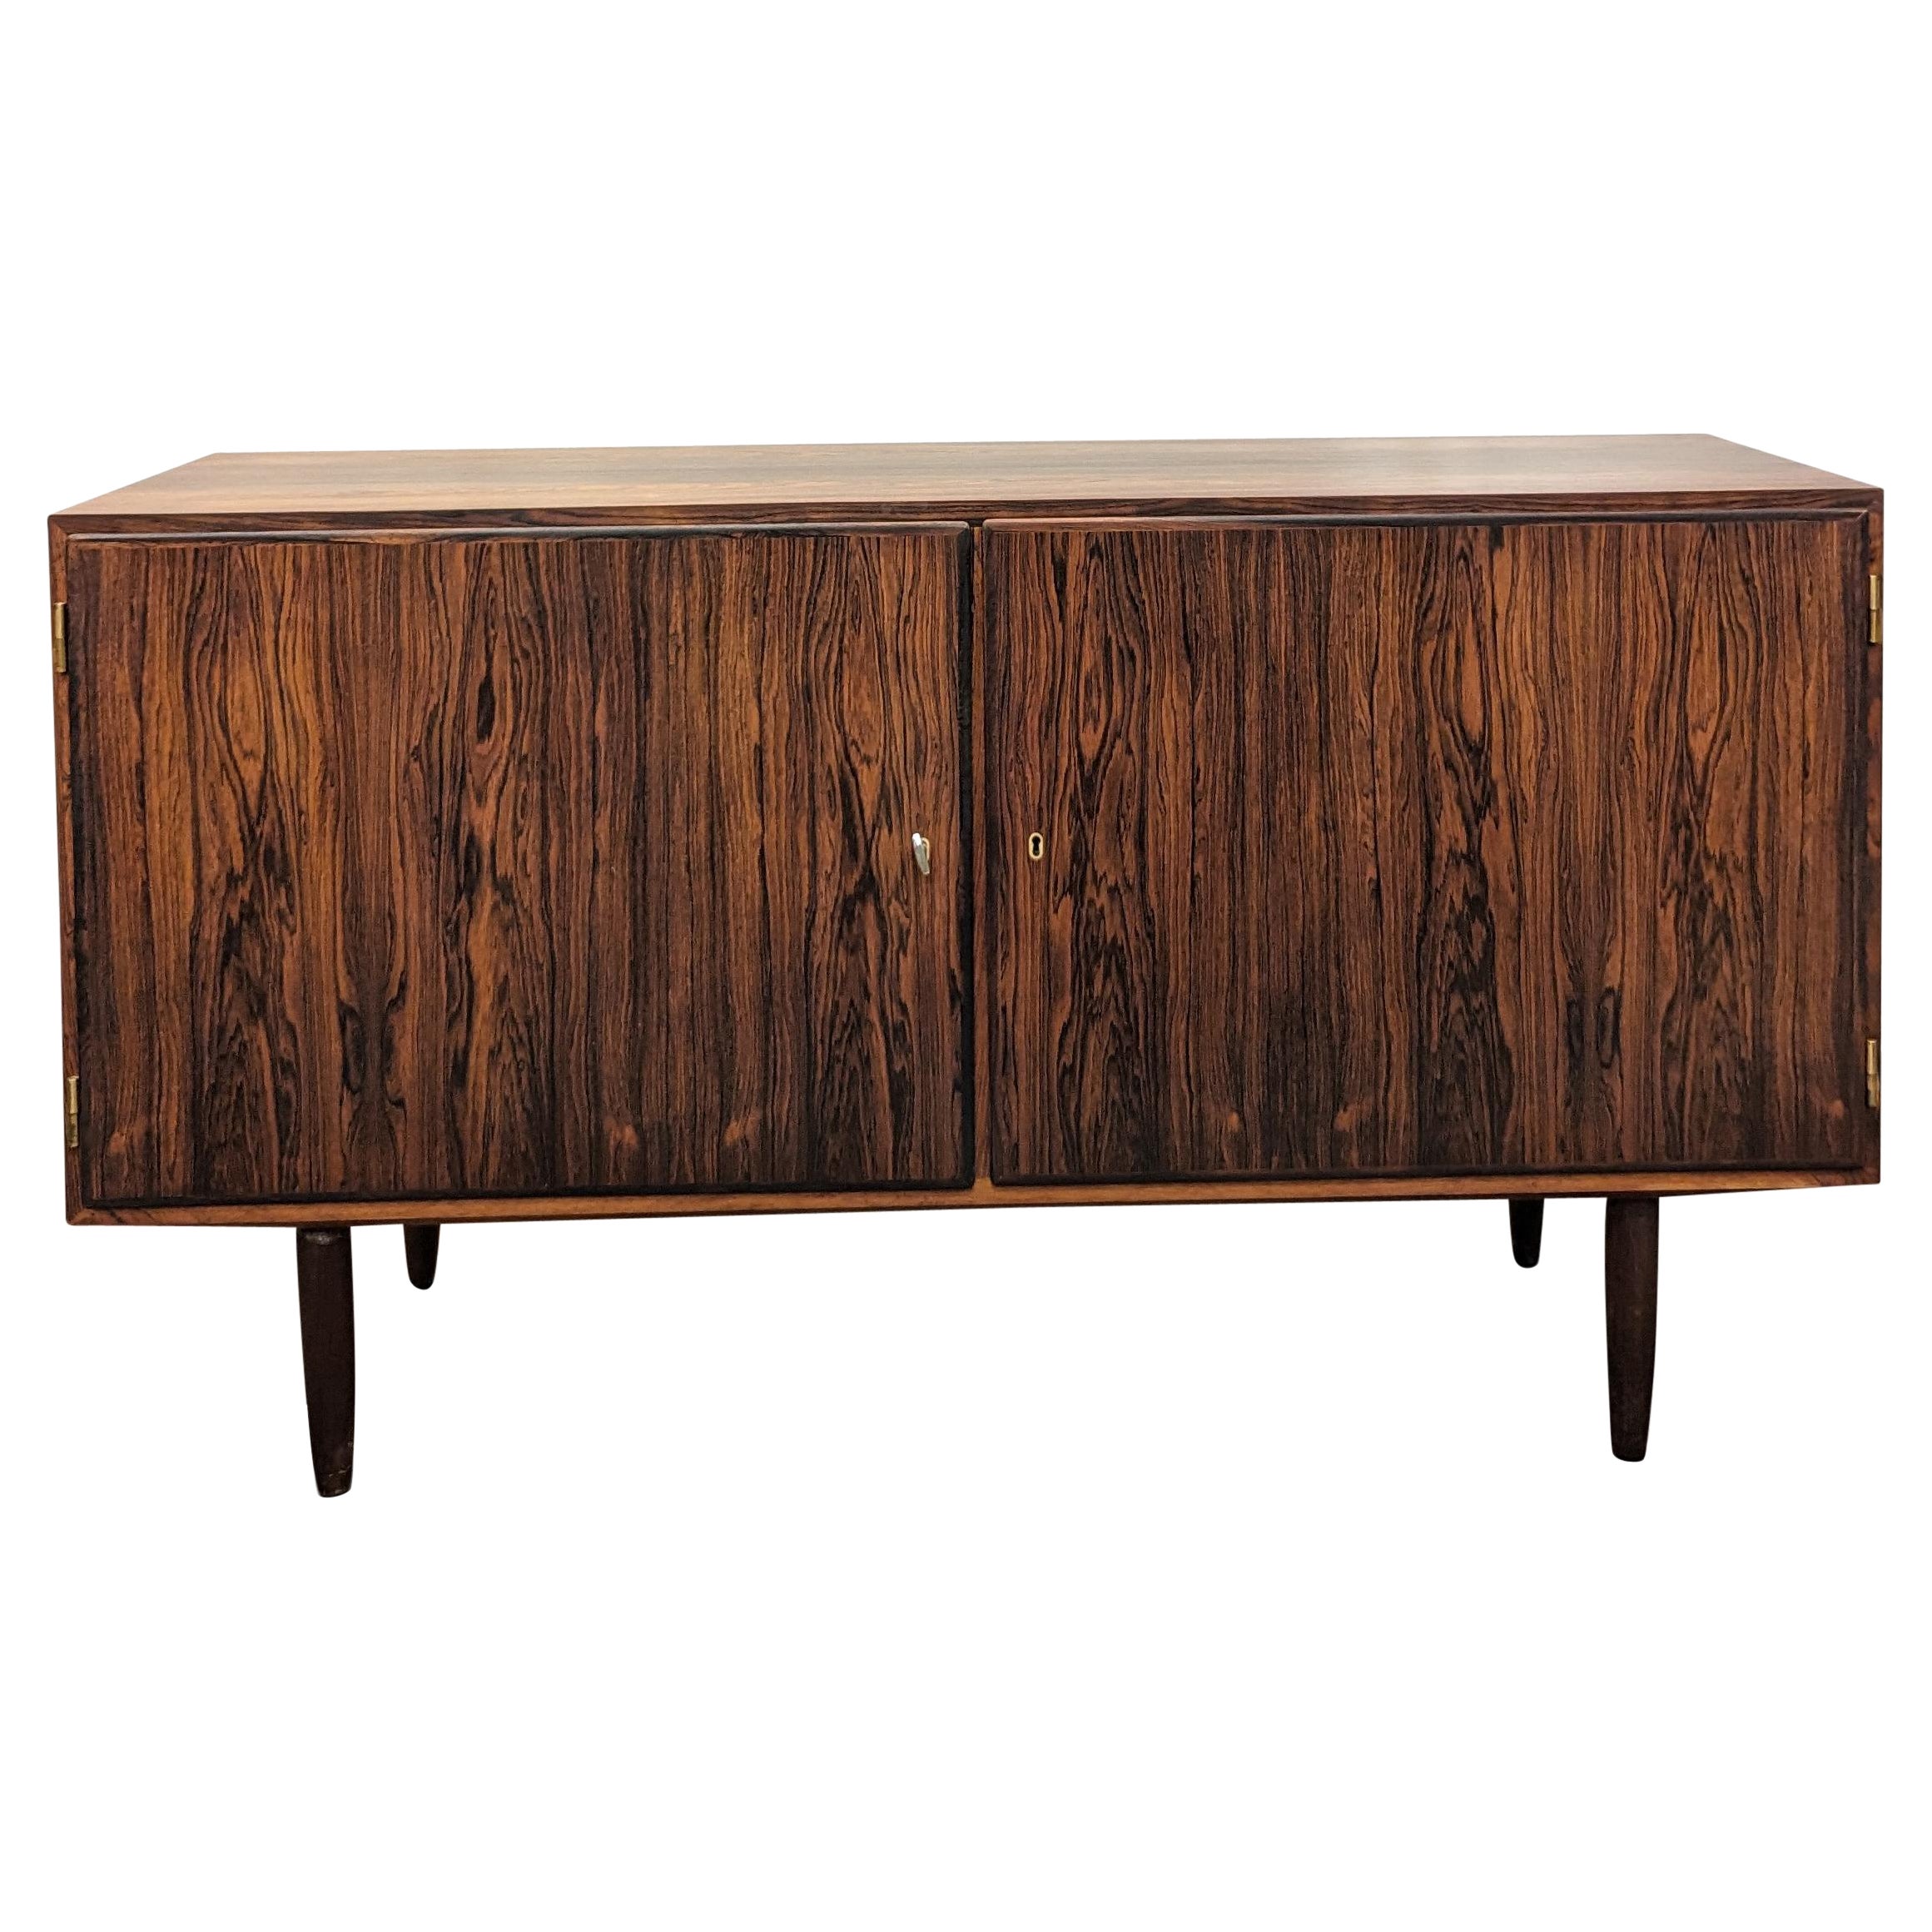 Vintage Danish Mid Century Rosewood Sideboard / Cabinet - 122363 For Sale